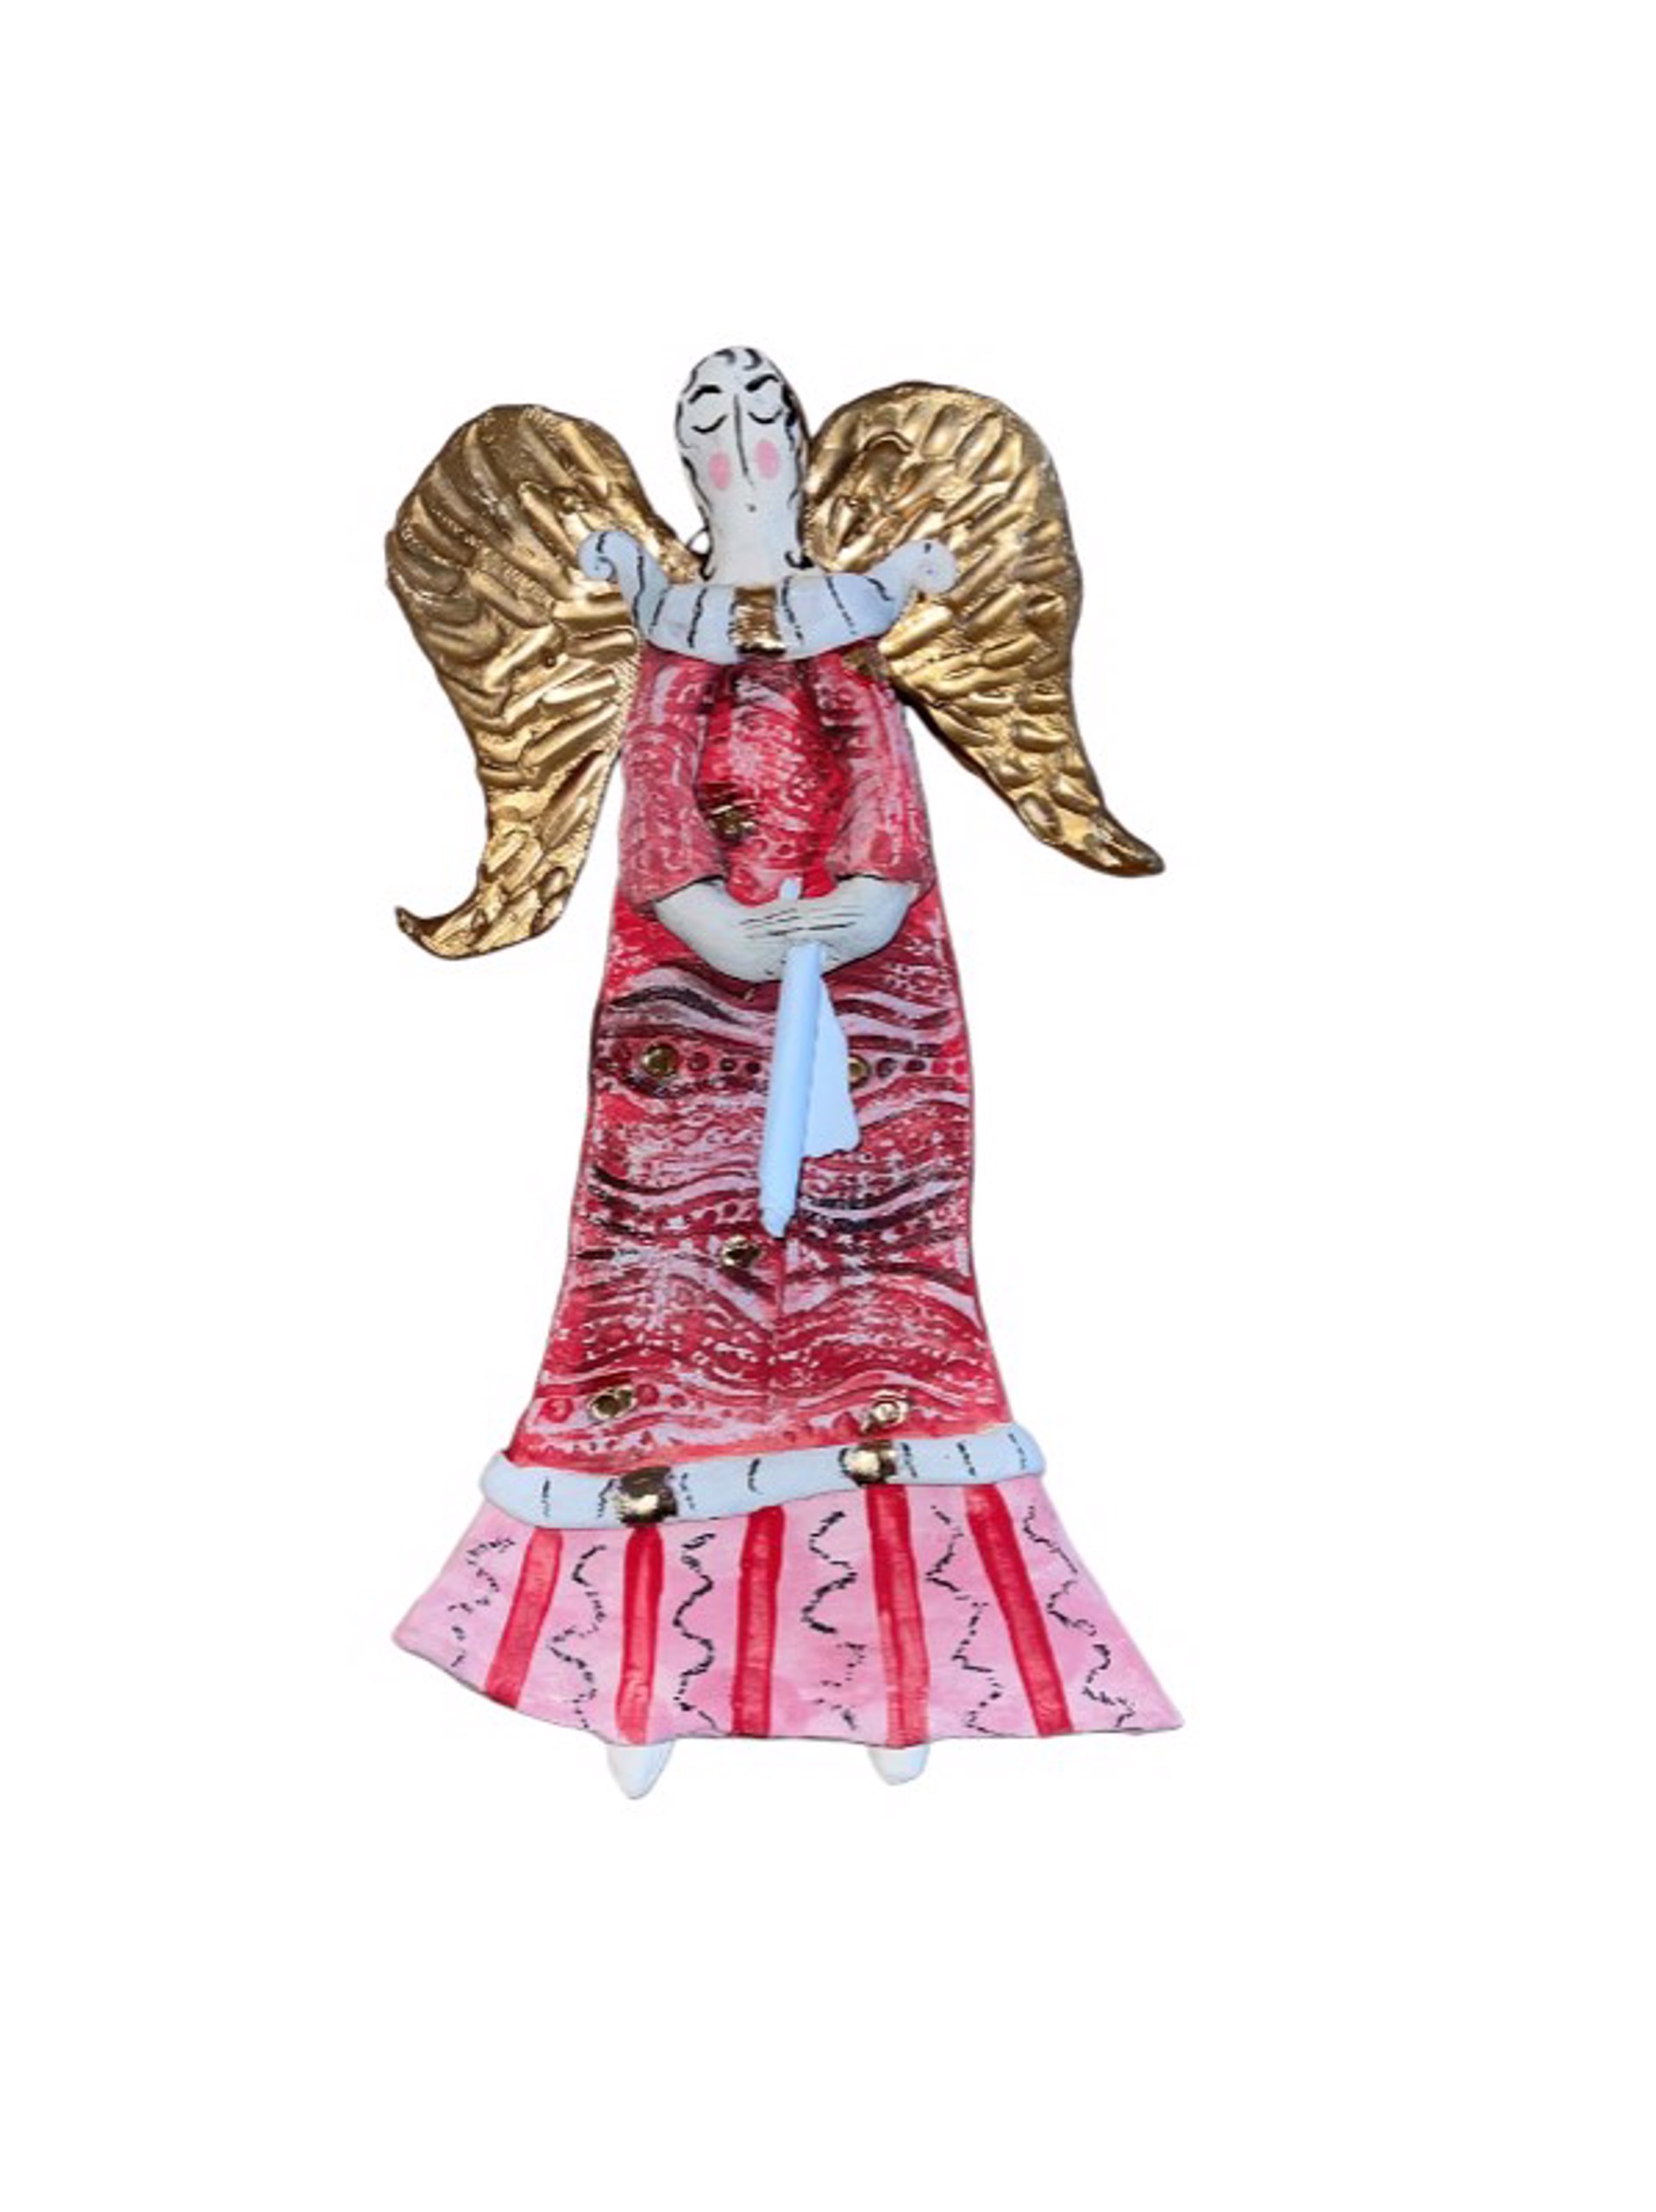 Large Prayer Angel by Justine Ferreri